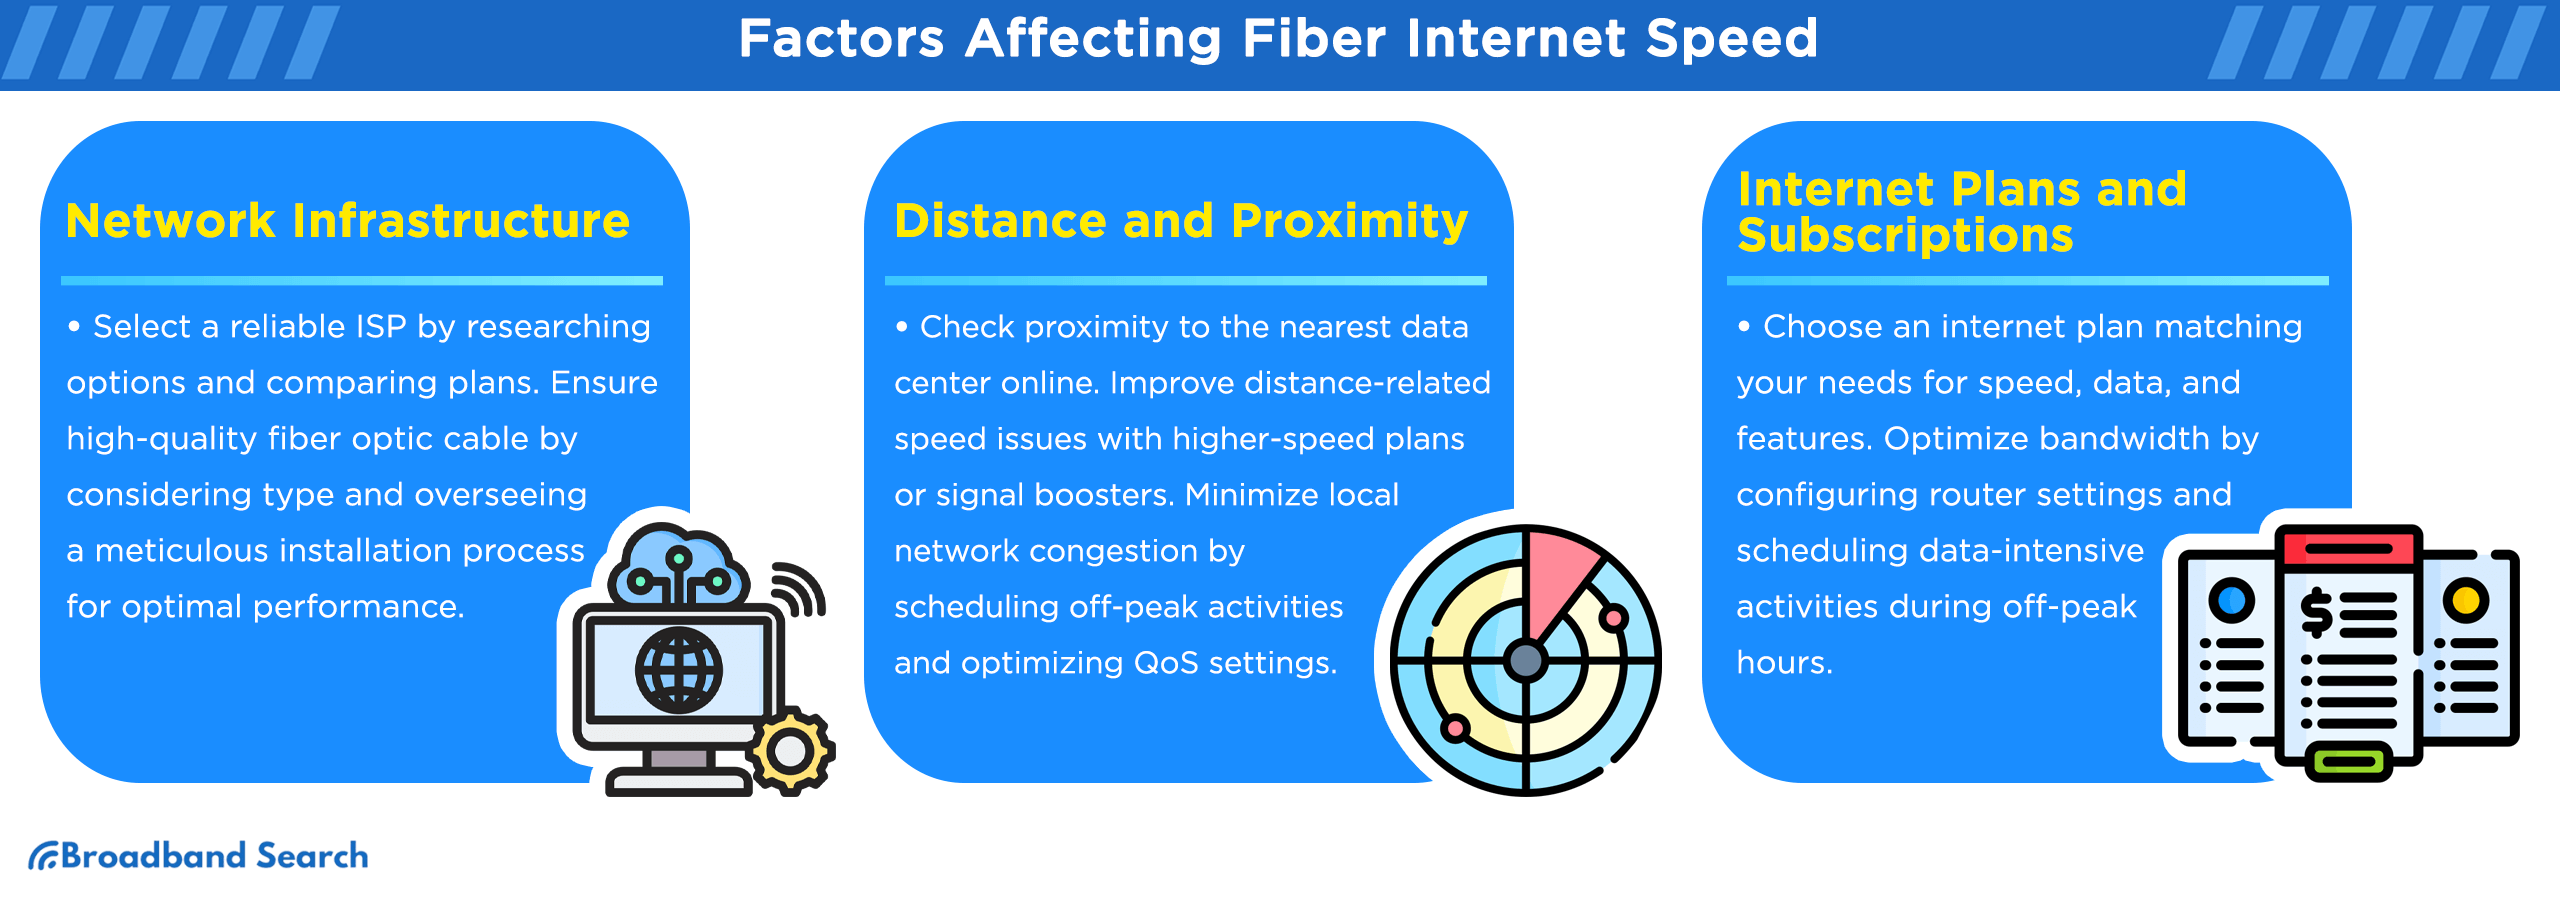 Three factors affecting fiber internet speed